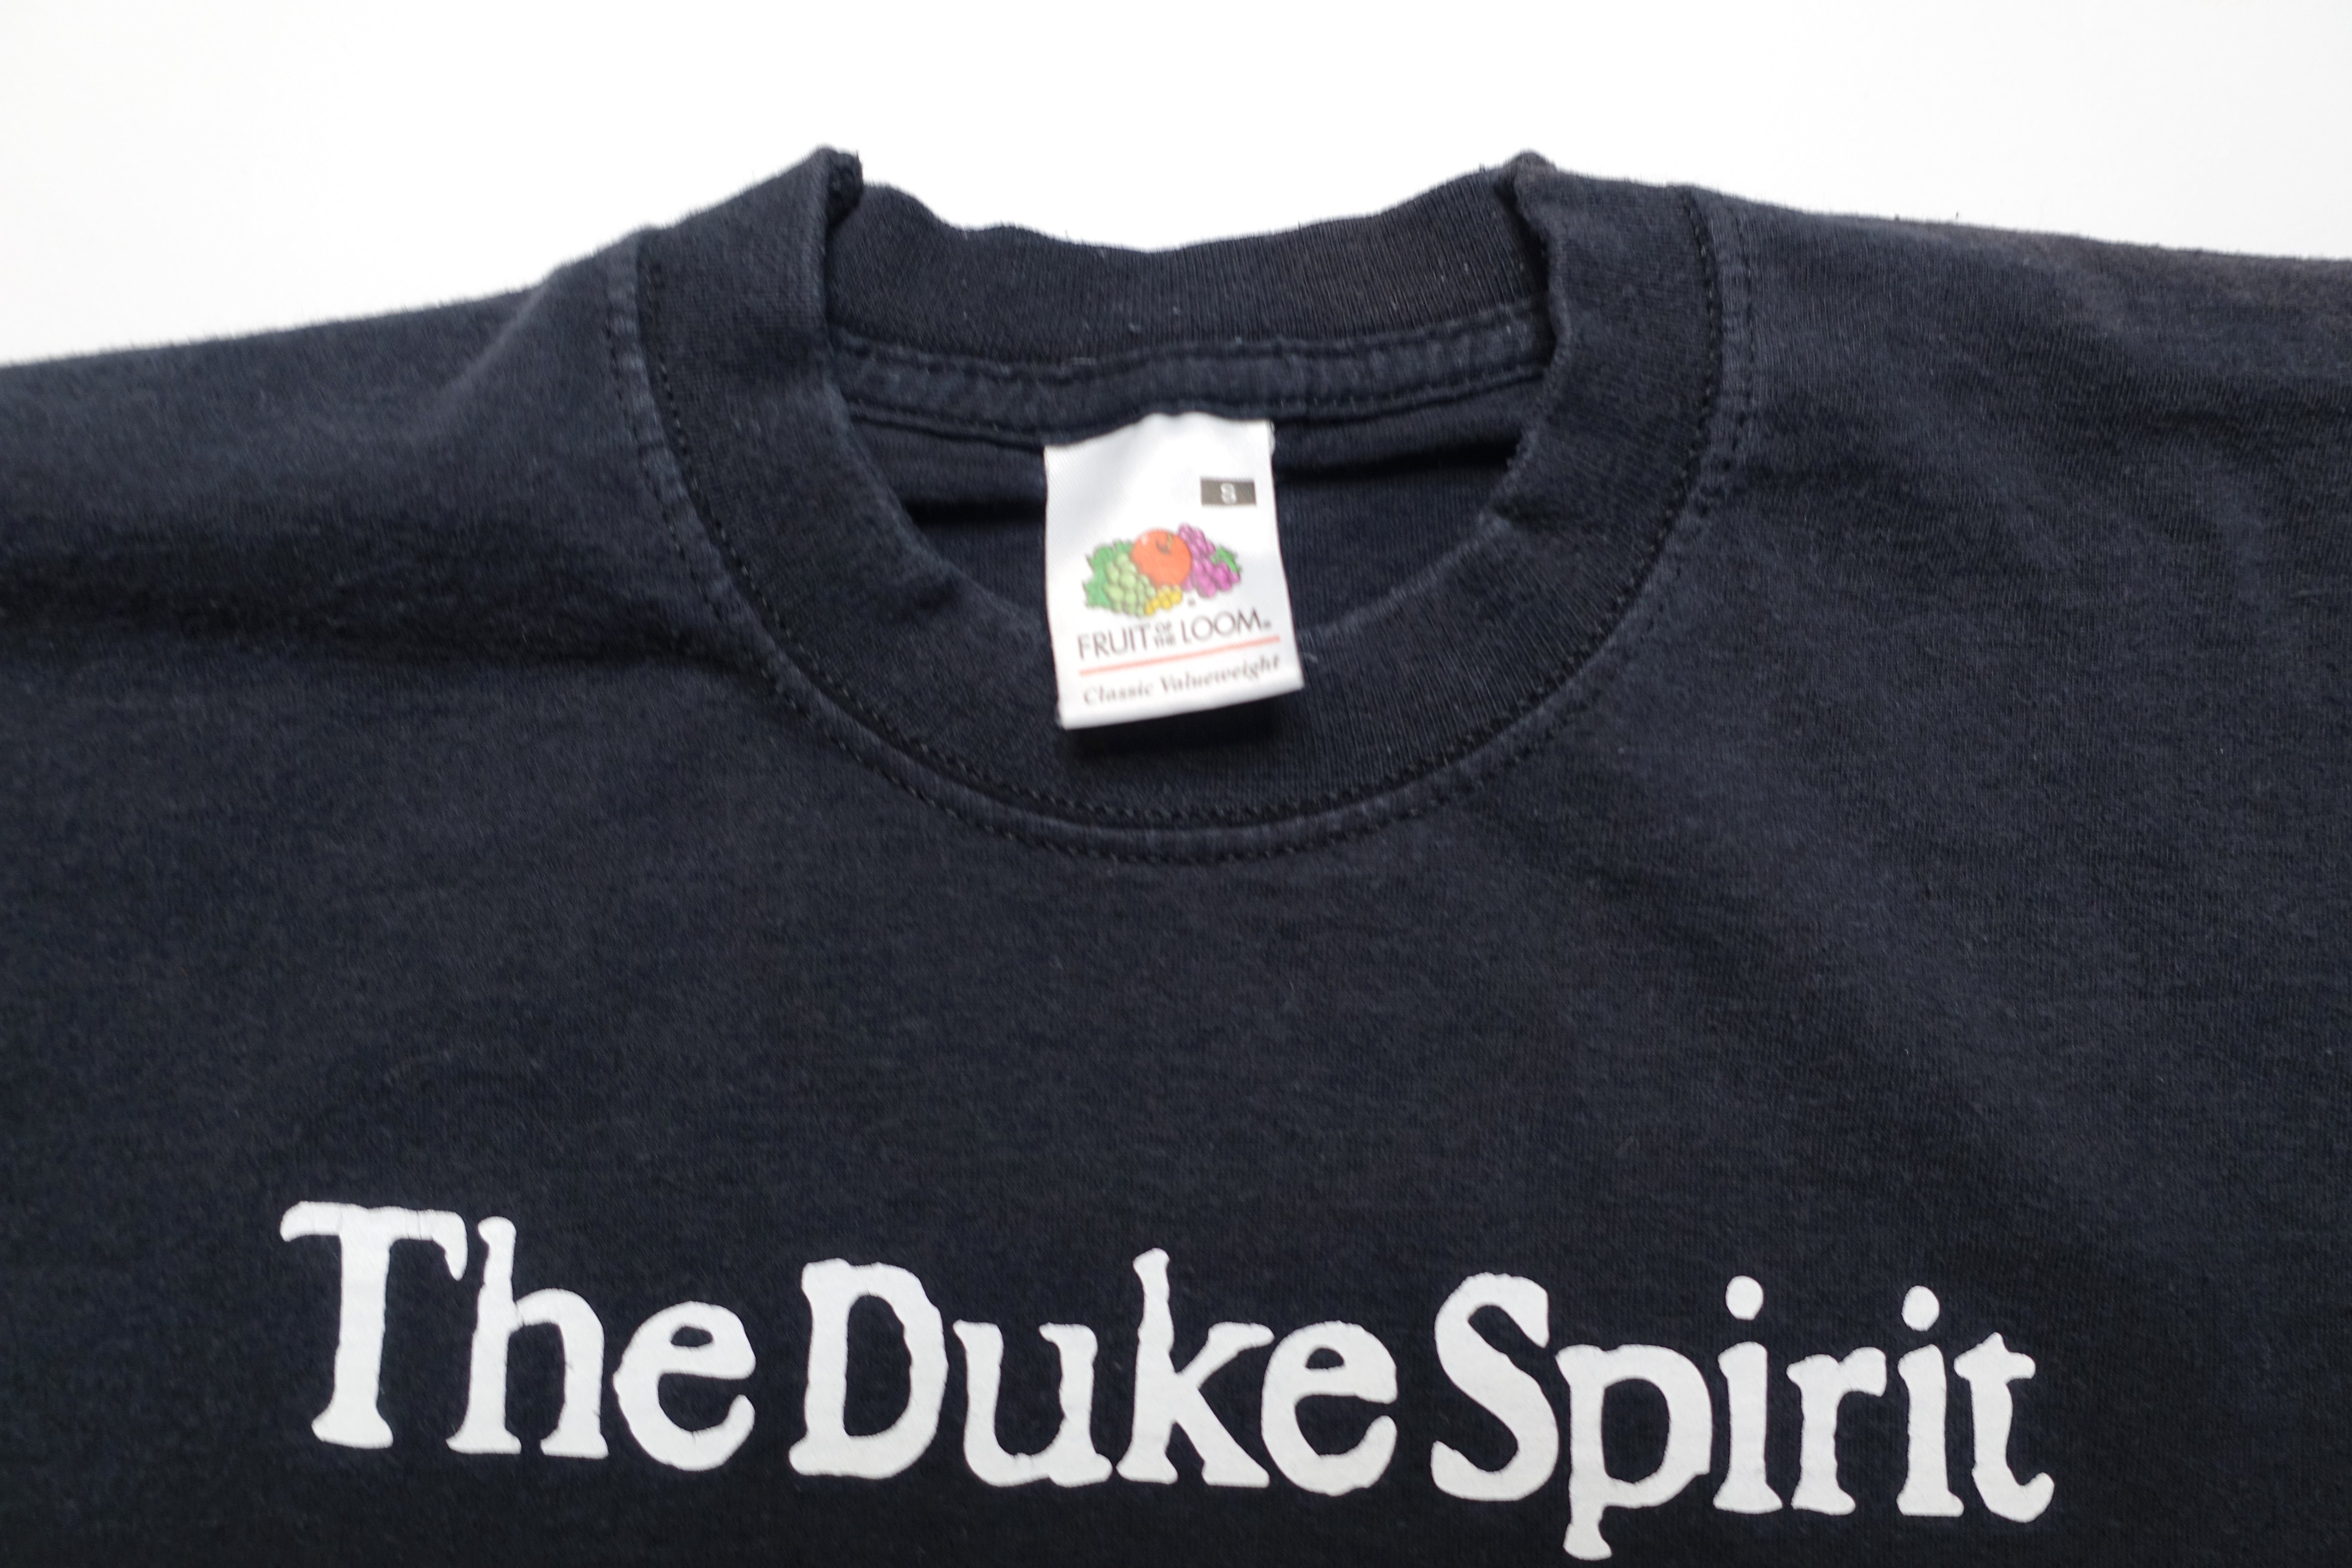 the Duke Spirit - Cuts Across The Land 2005 Tour Shirt Size Small